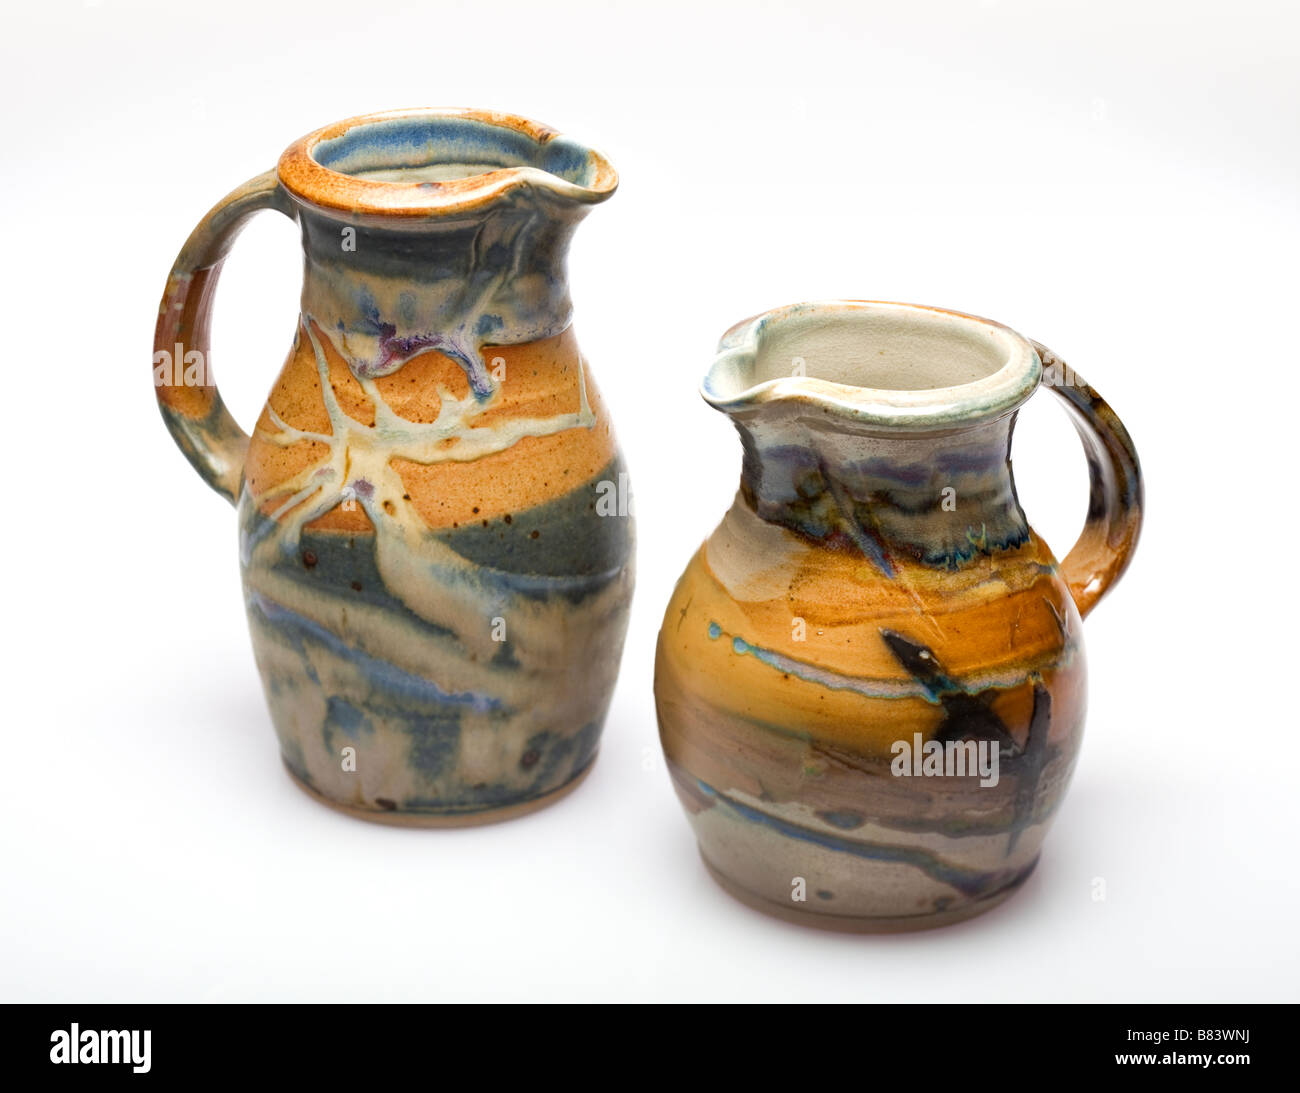 Dos jarras realizadas por la alfarería Edinbane en la Isla de Skye Escocia UK Foto de stock